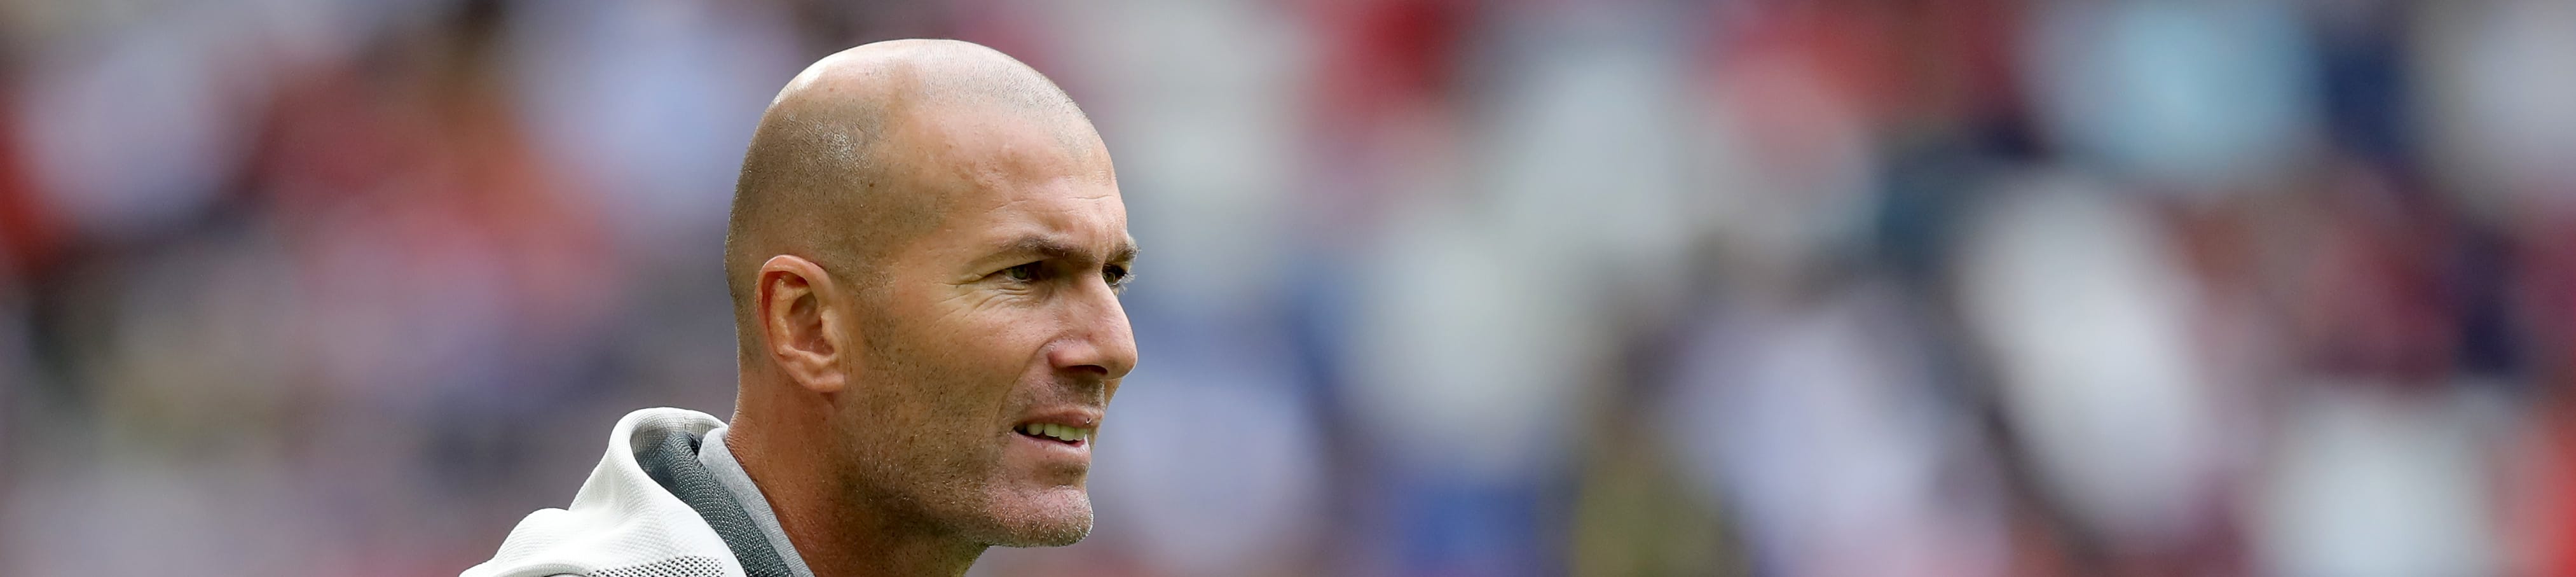 Maiorca-Real Madrid, Zidane ordina alle merengues il salto di qualità